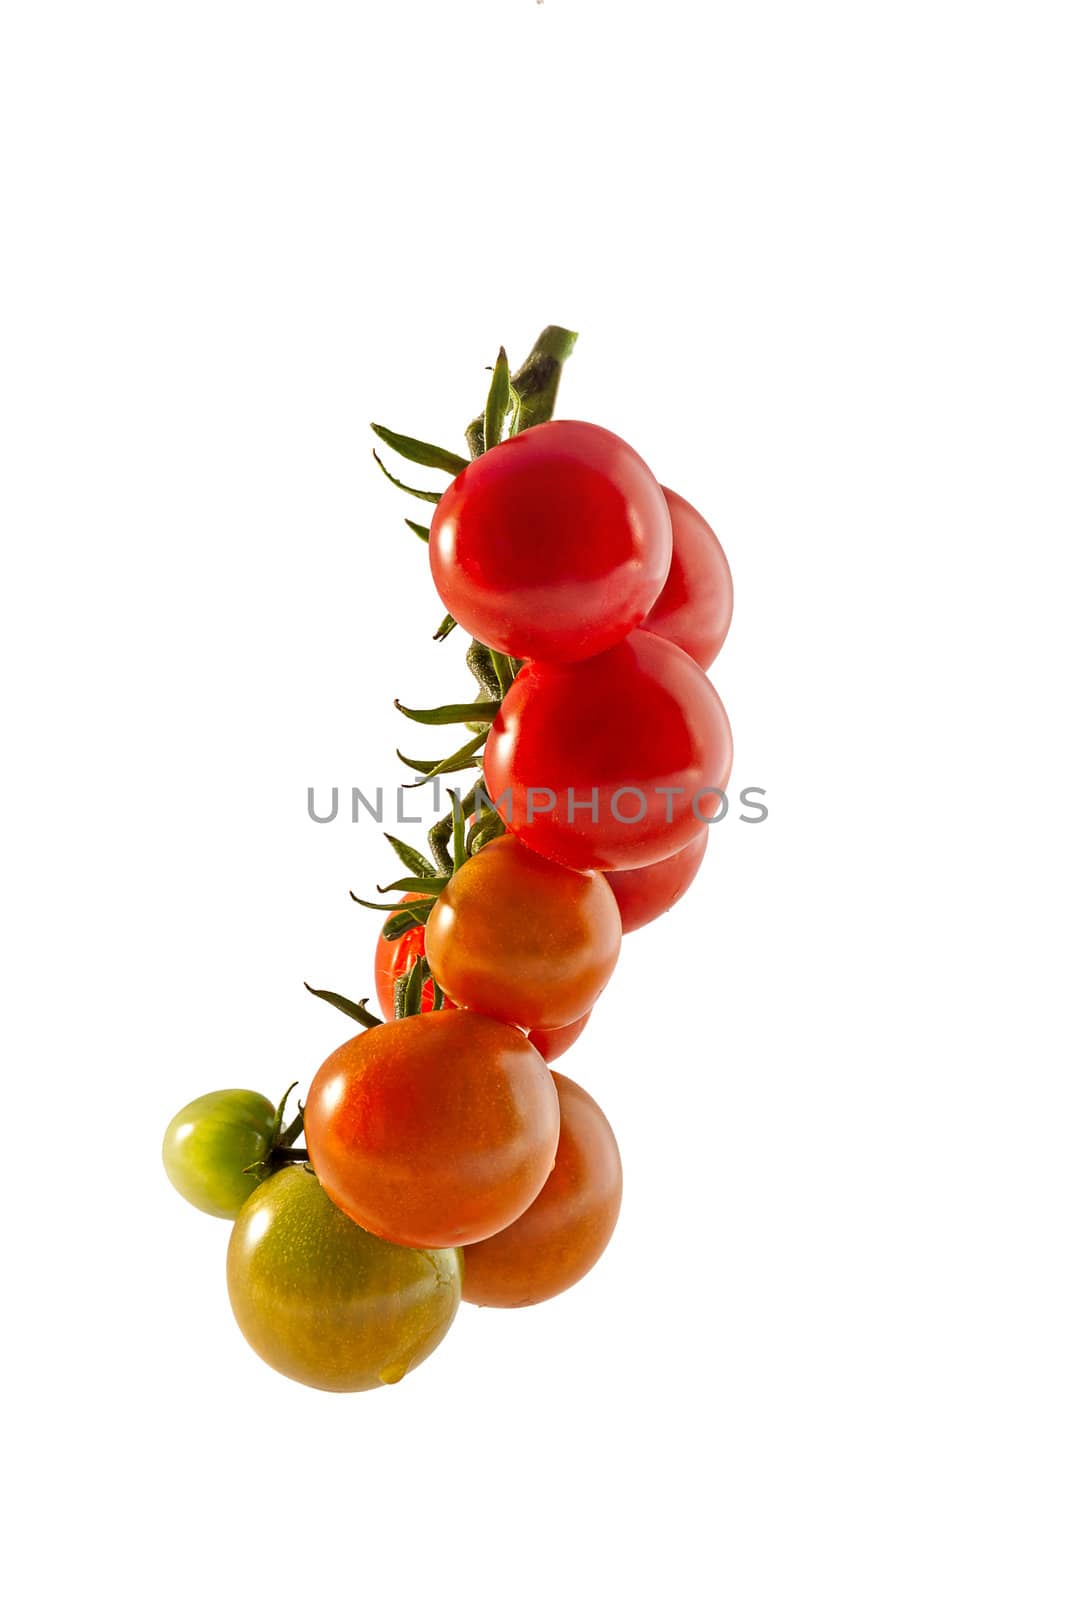 Cherry tomatoes by zhannaprokopeva